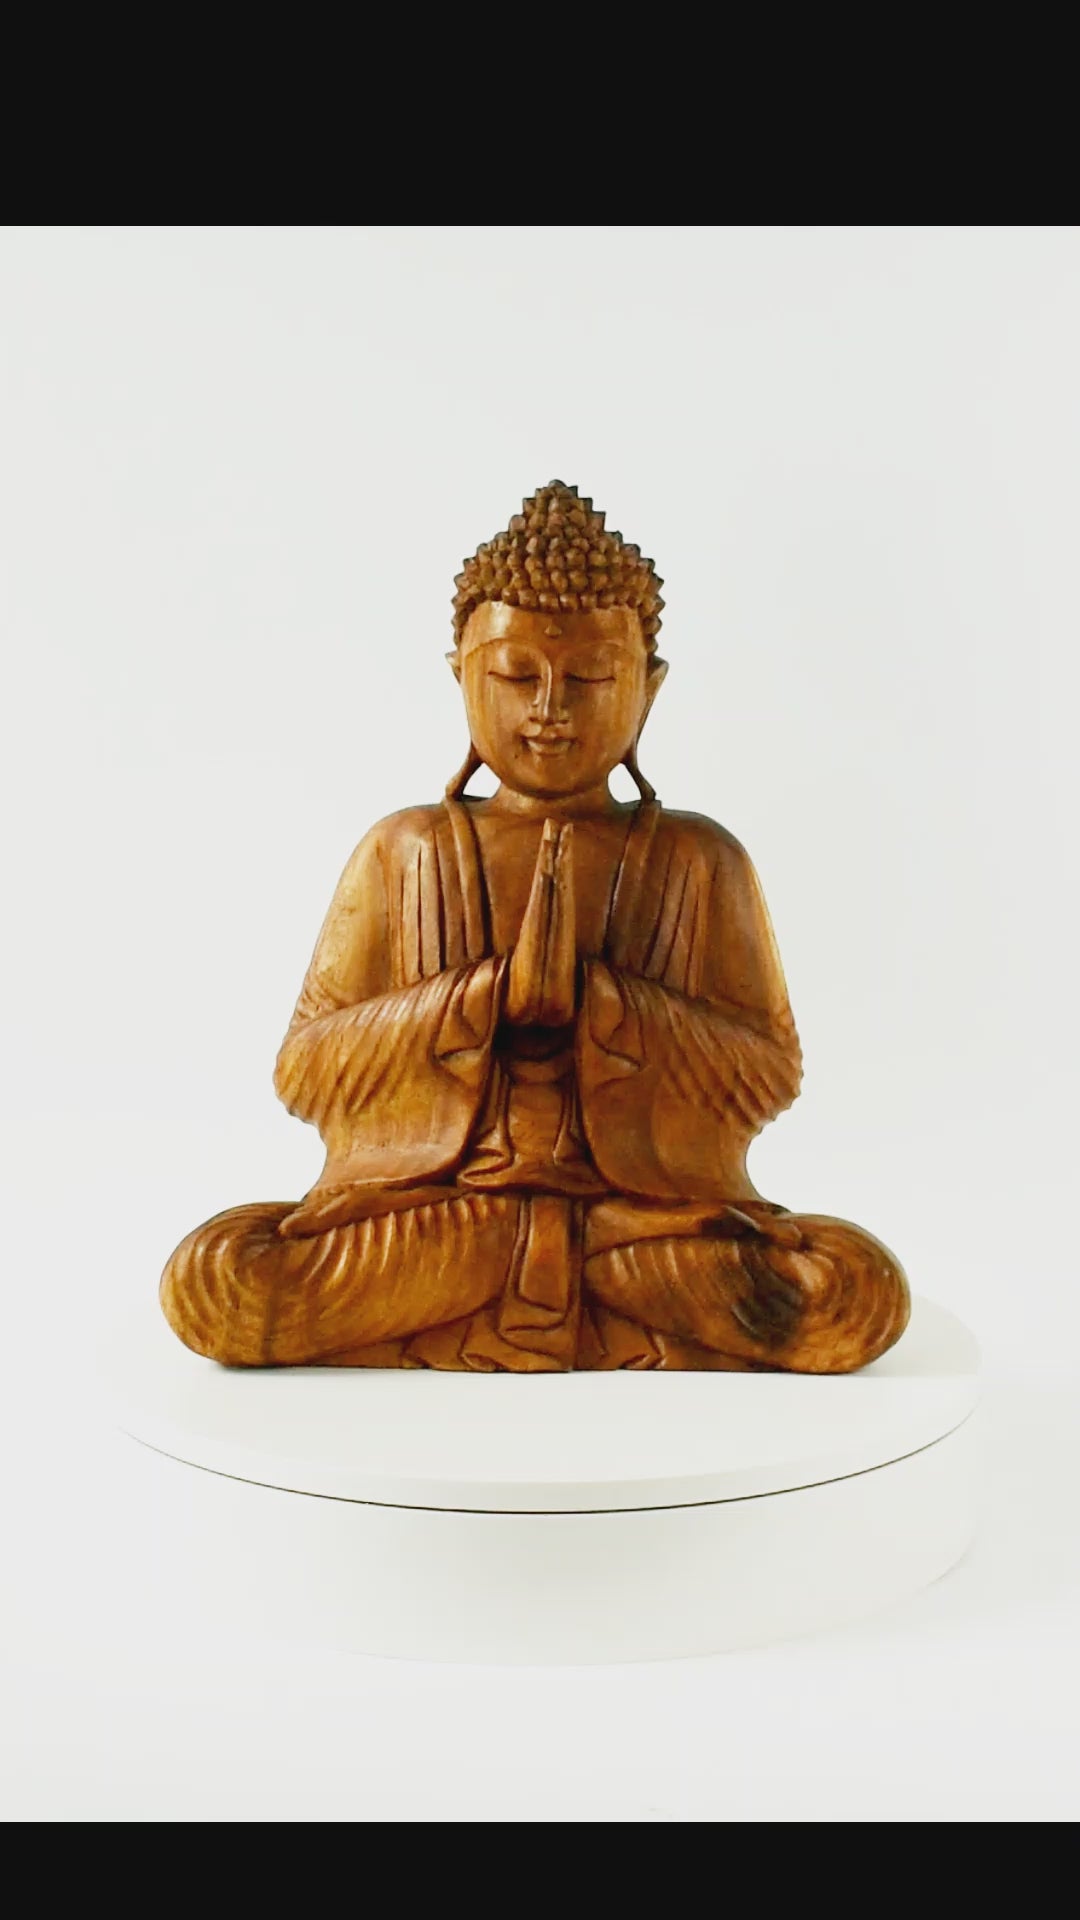 Wooden Serene Sitting Buddha "Anjali Mudra" Statue Handmade Meditating Sculpture Figurine Home Decor Accent Handcrafted Art Modern Oriental Decor